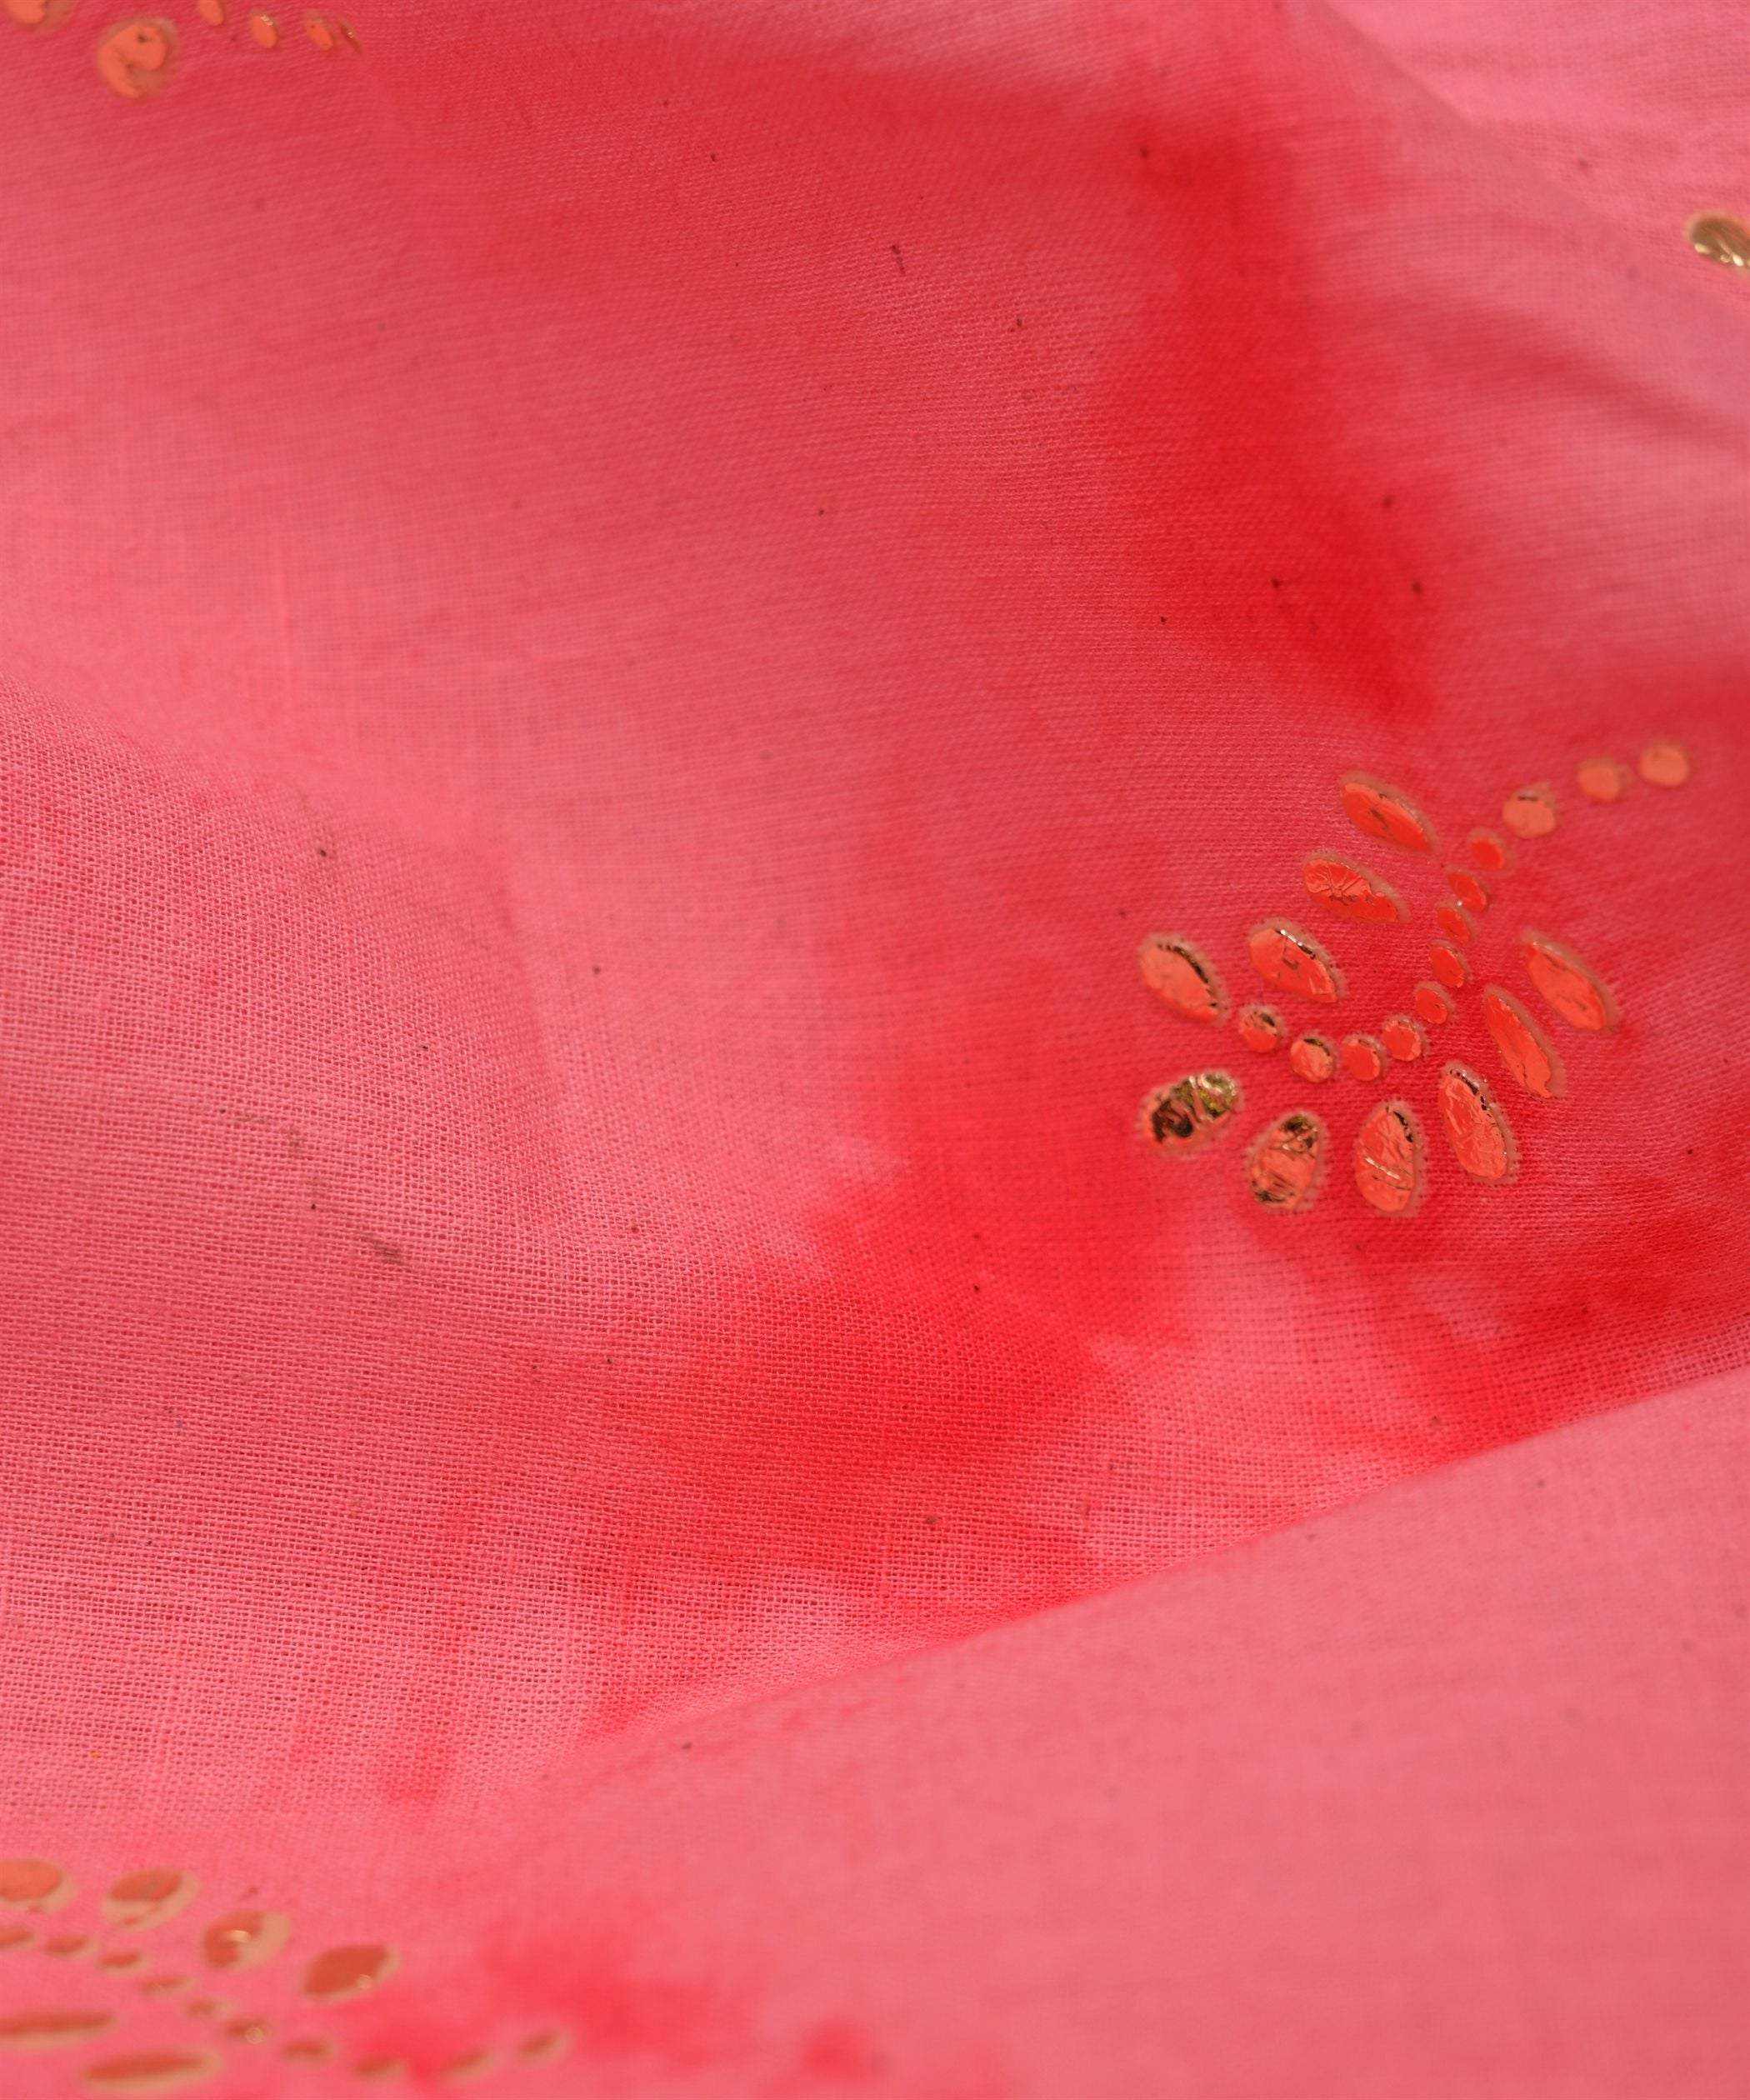 Hot pink Shibori print on Mal cotton Fabric with Motif Mukaish work